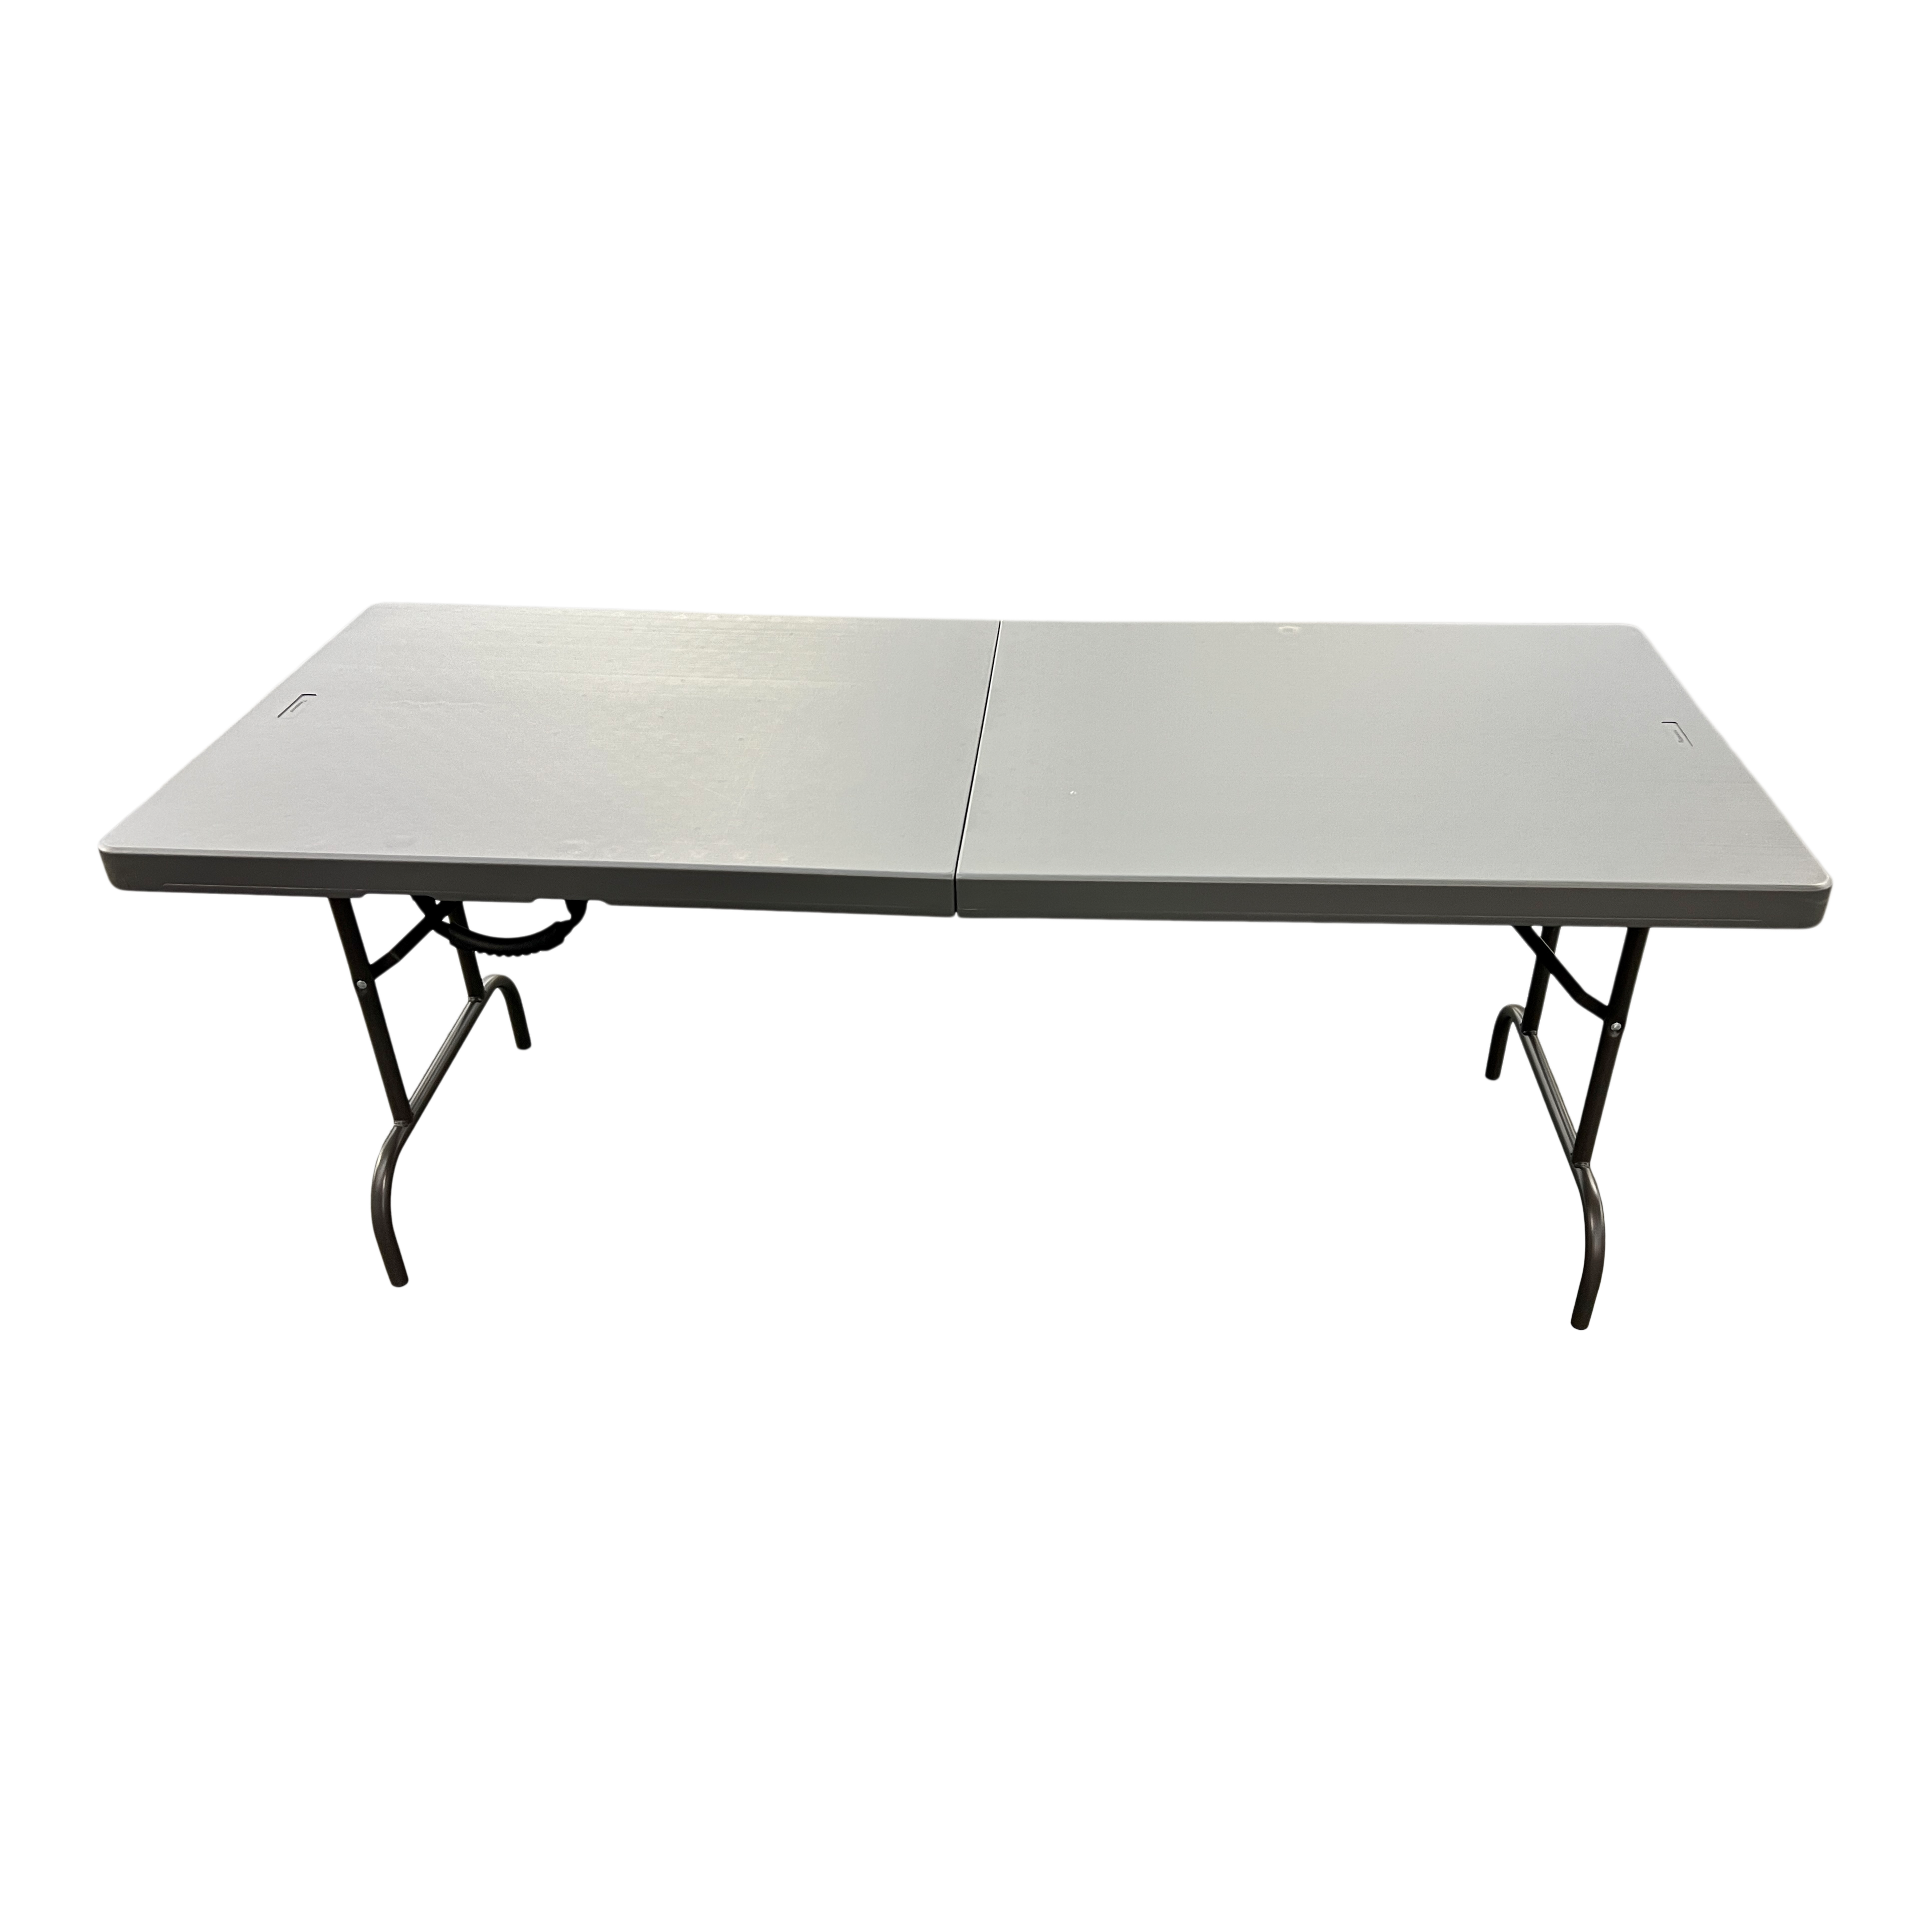 A charcoal six-foot bi-fold folding table. 